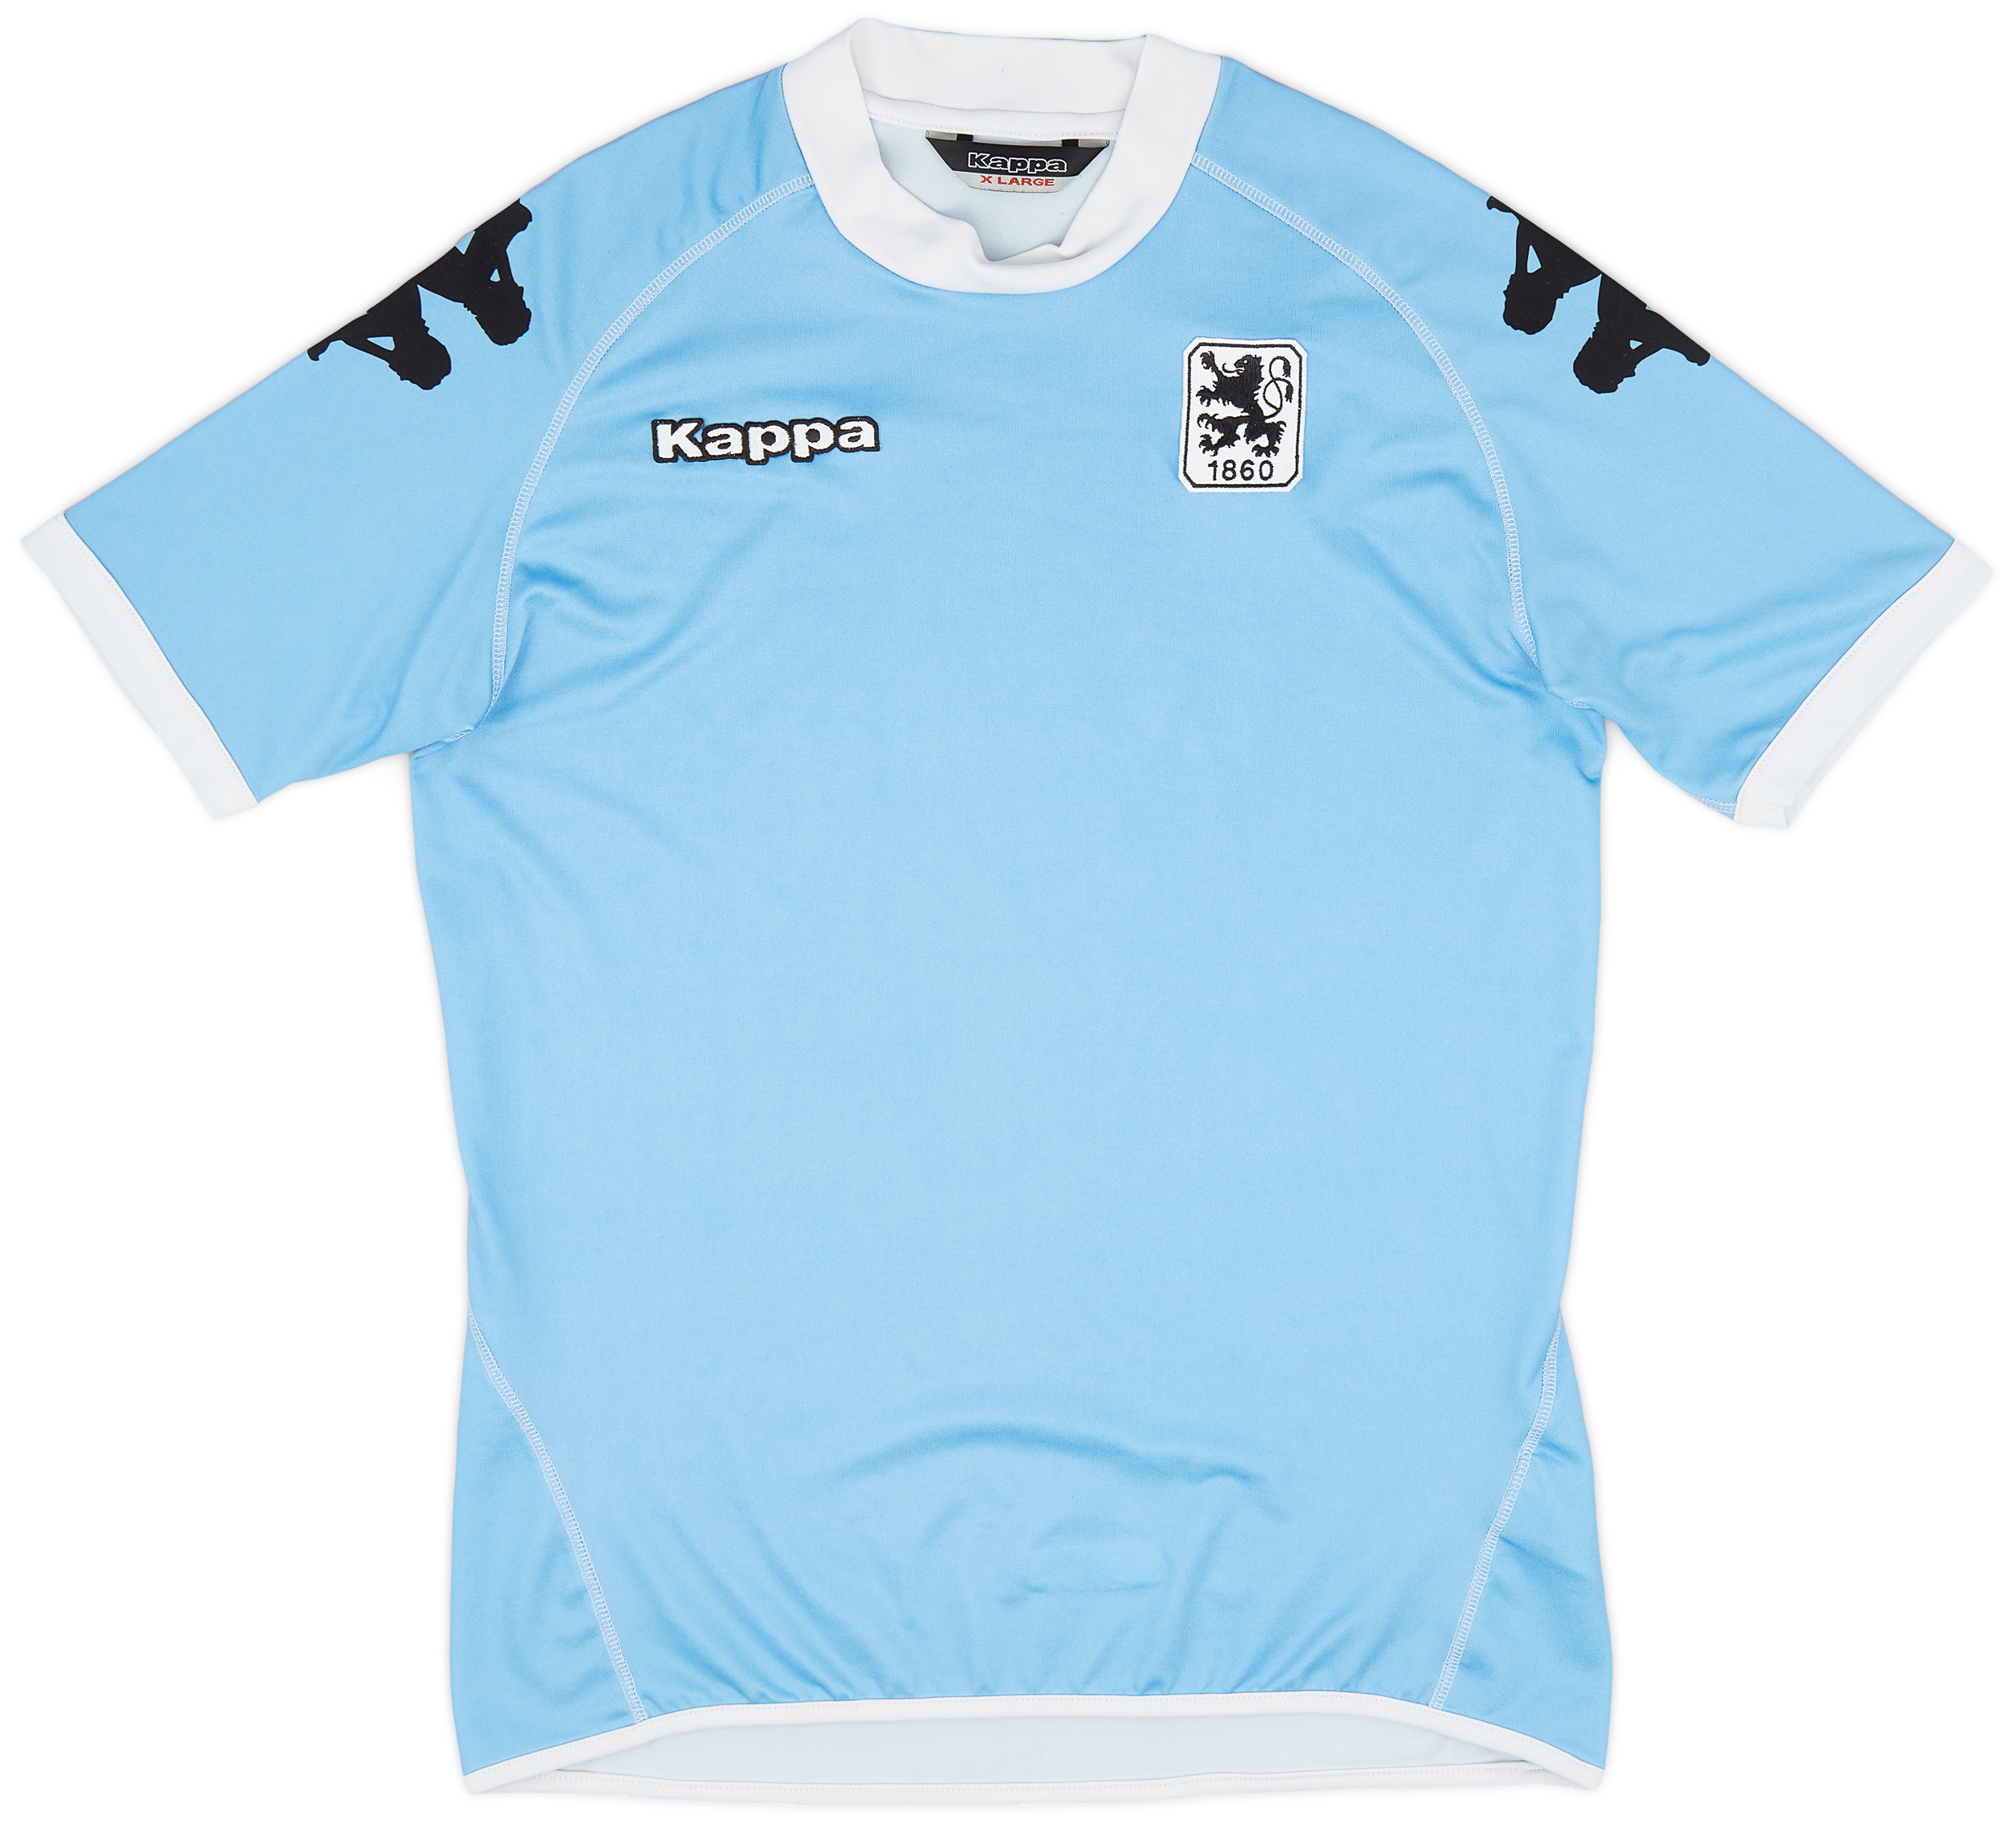 Retro 1860 Munich Shirt